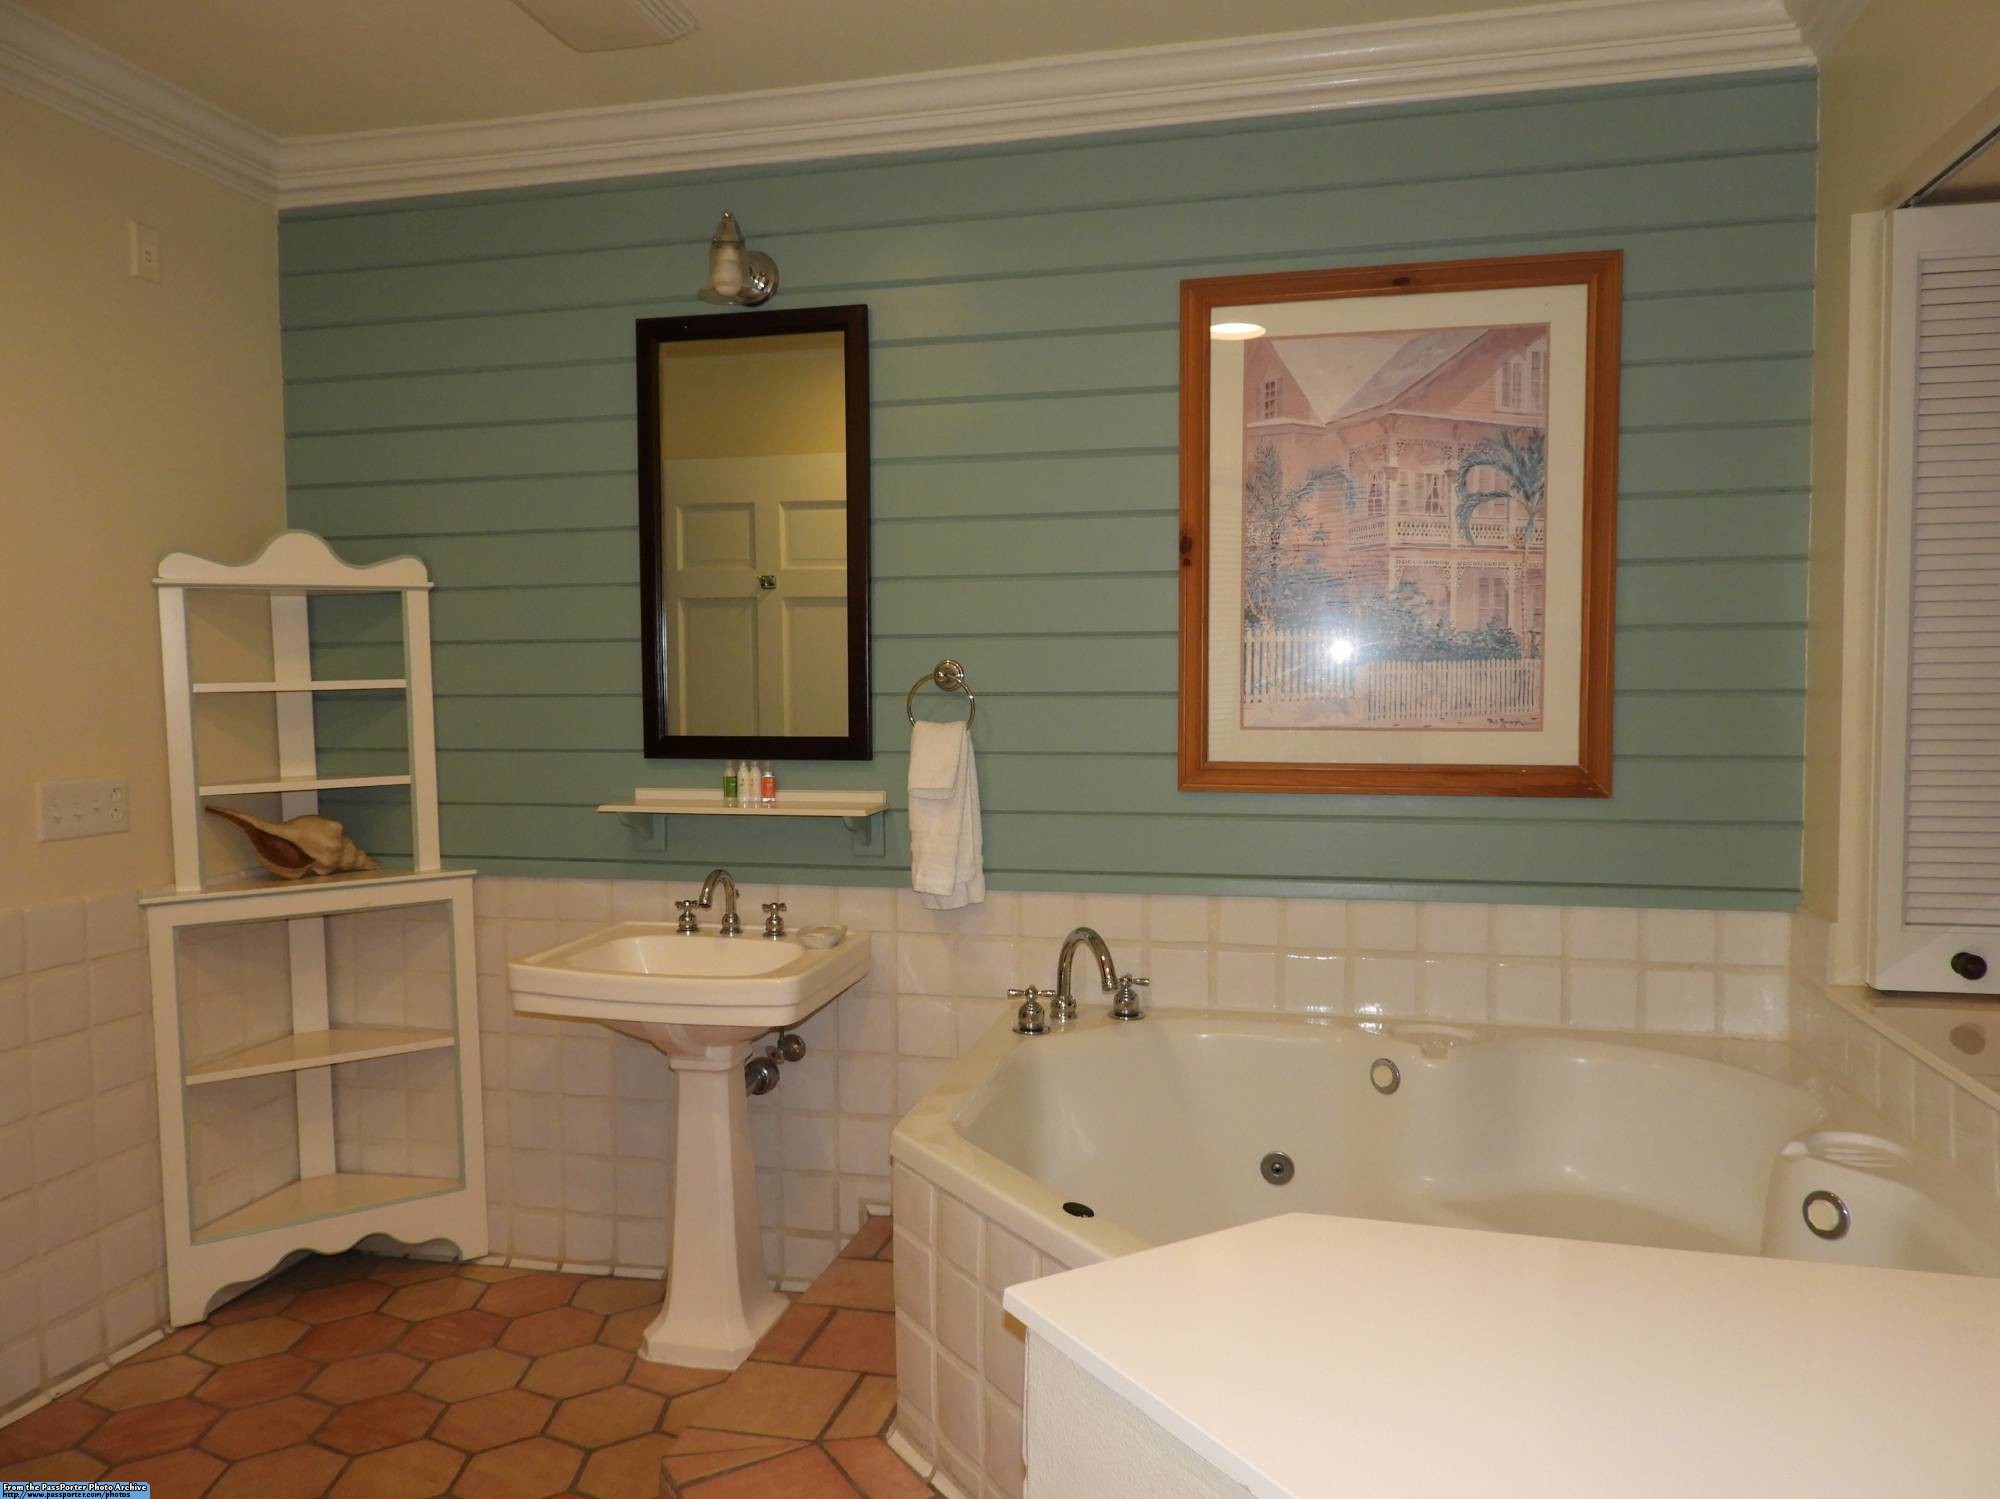 Old Key West - one bedroom villa